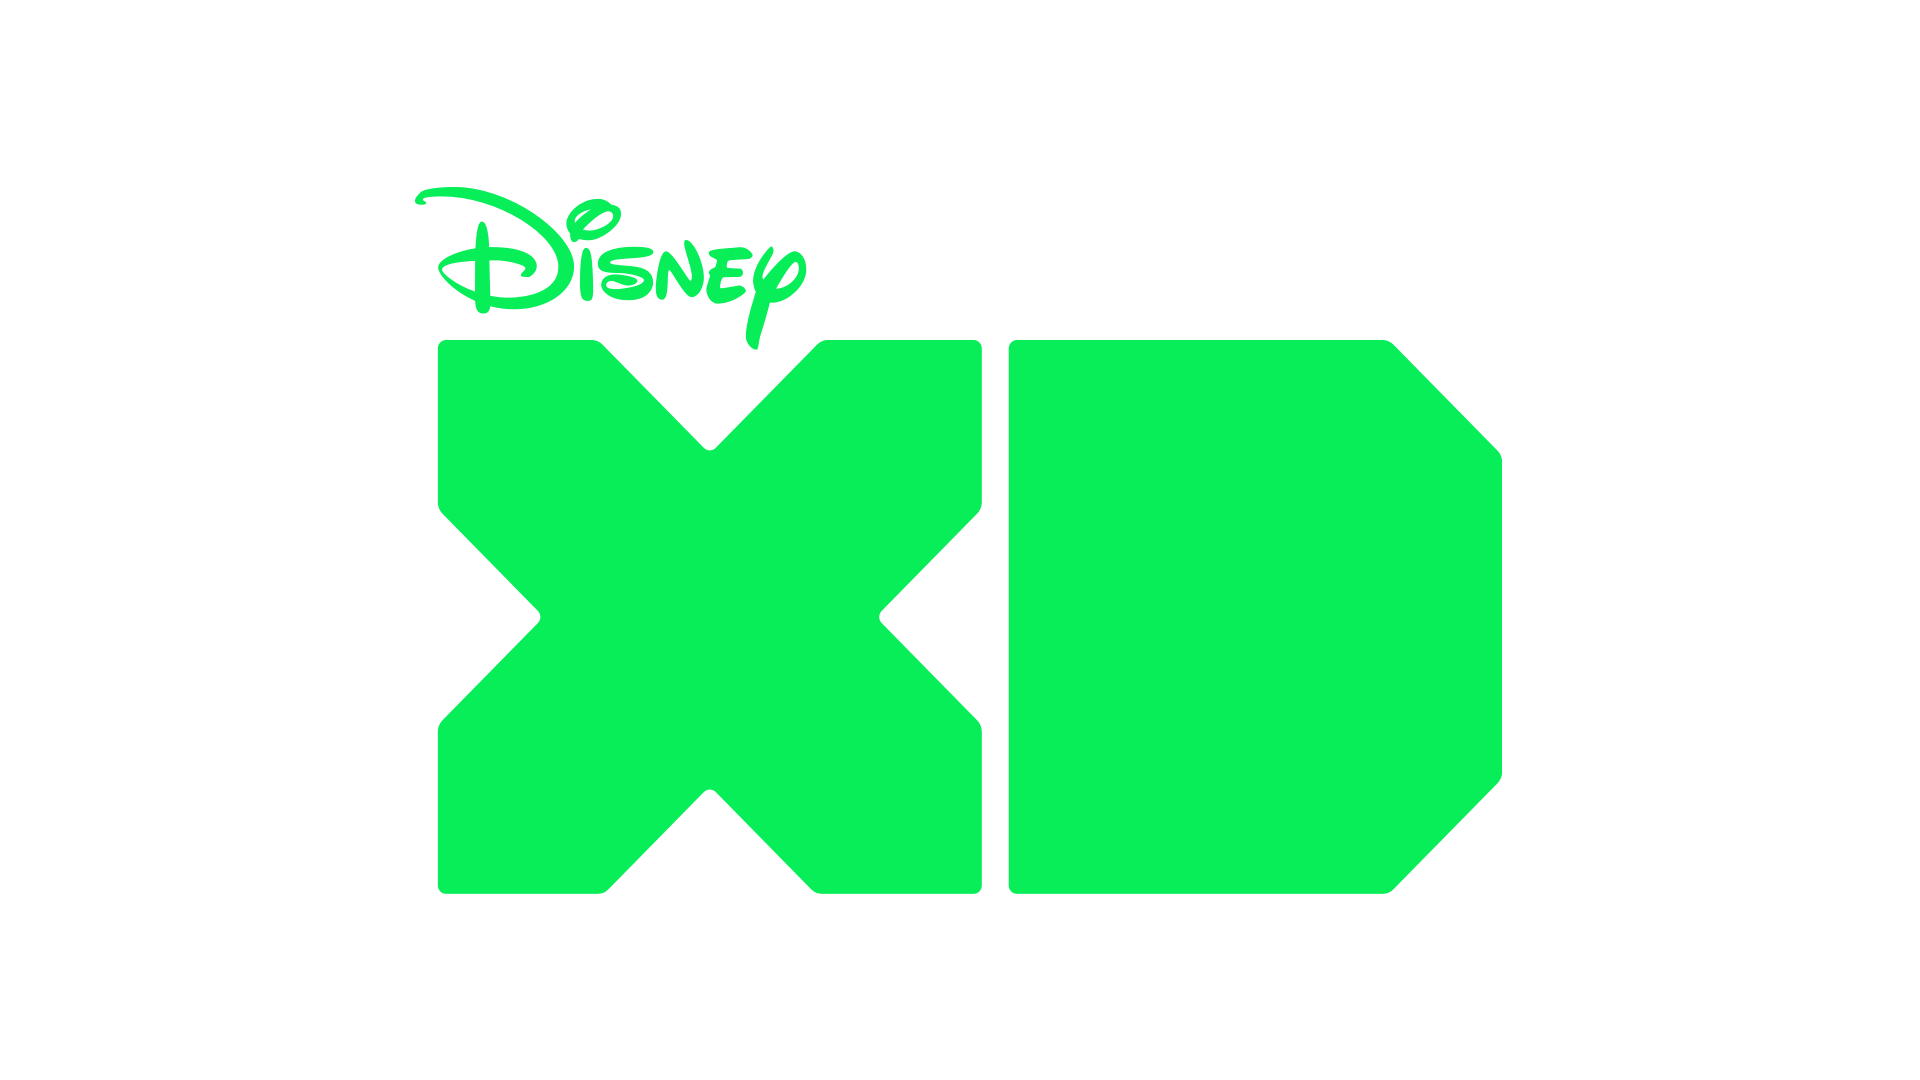 Disney XD HD Logo - Disney XD 2015svg Wikimedia Commons Logo Image Logo Png